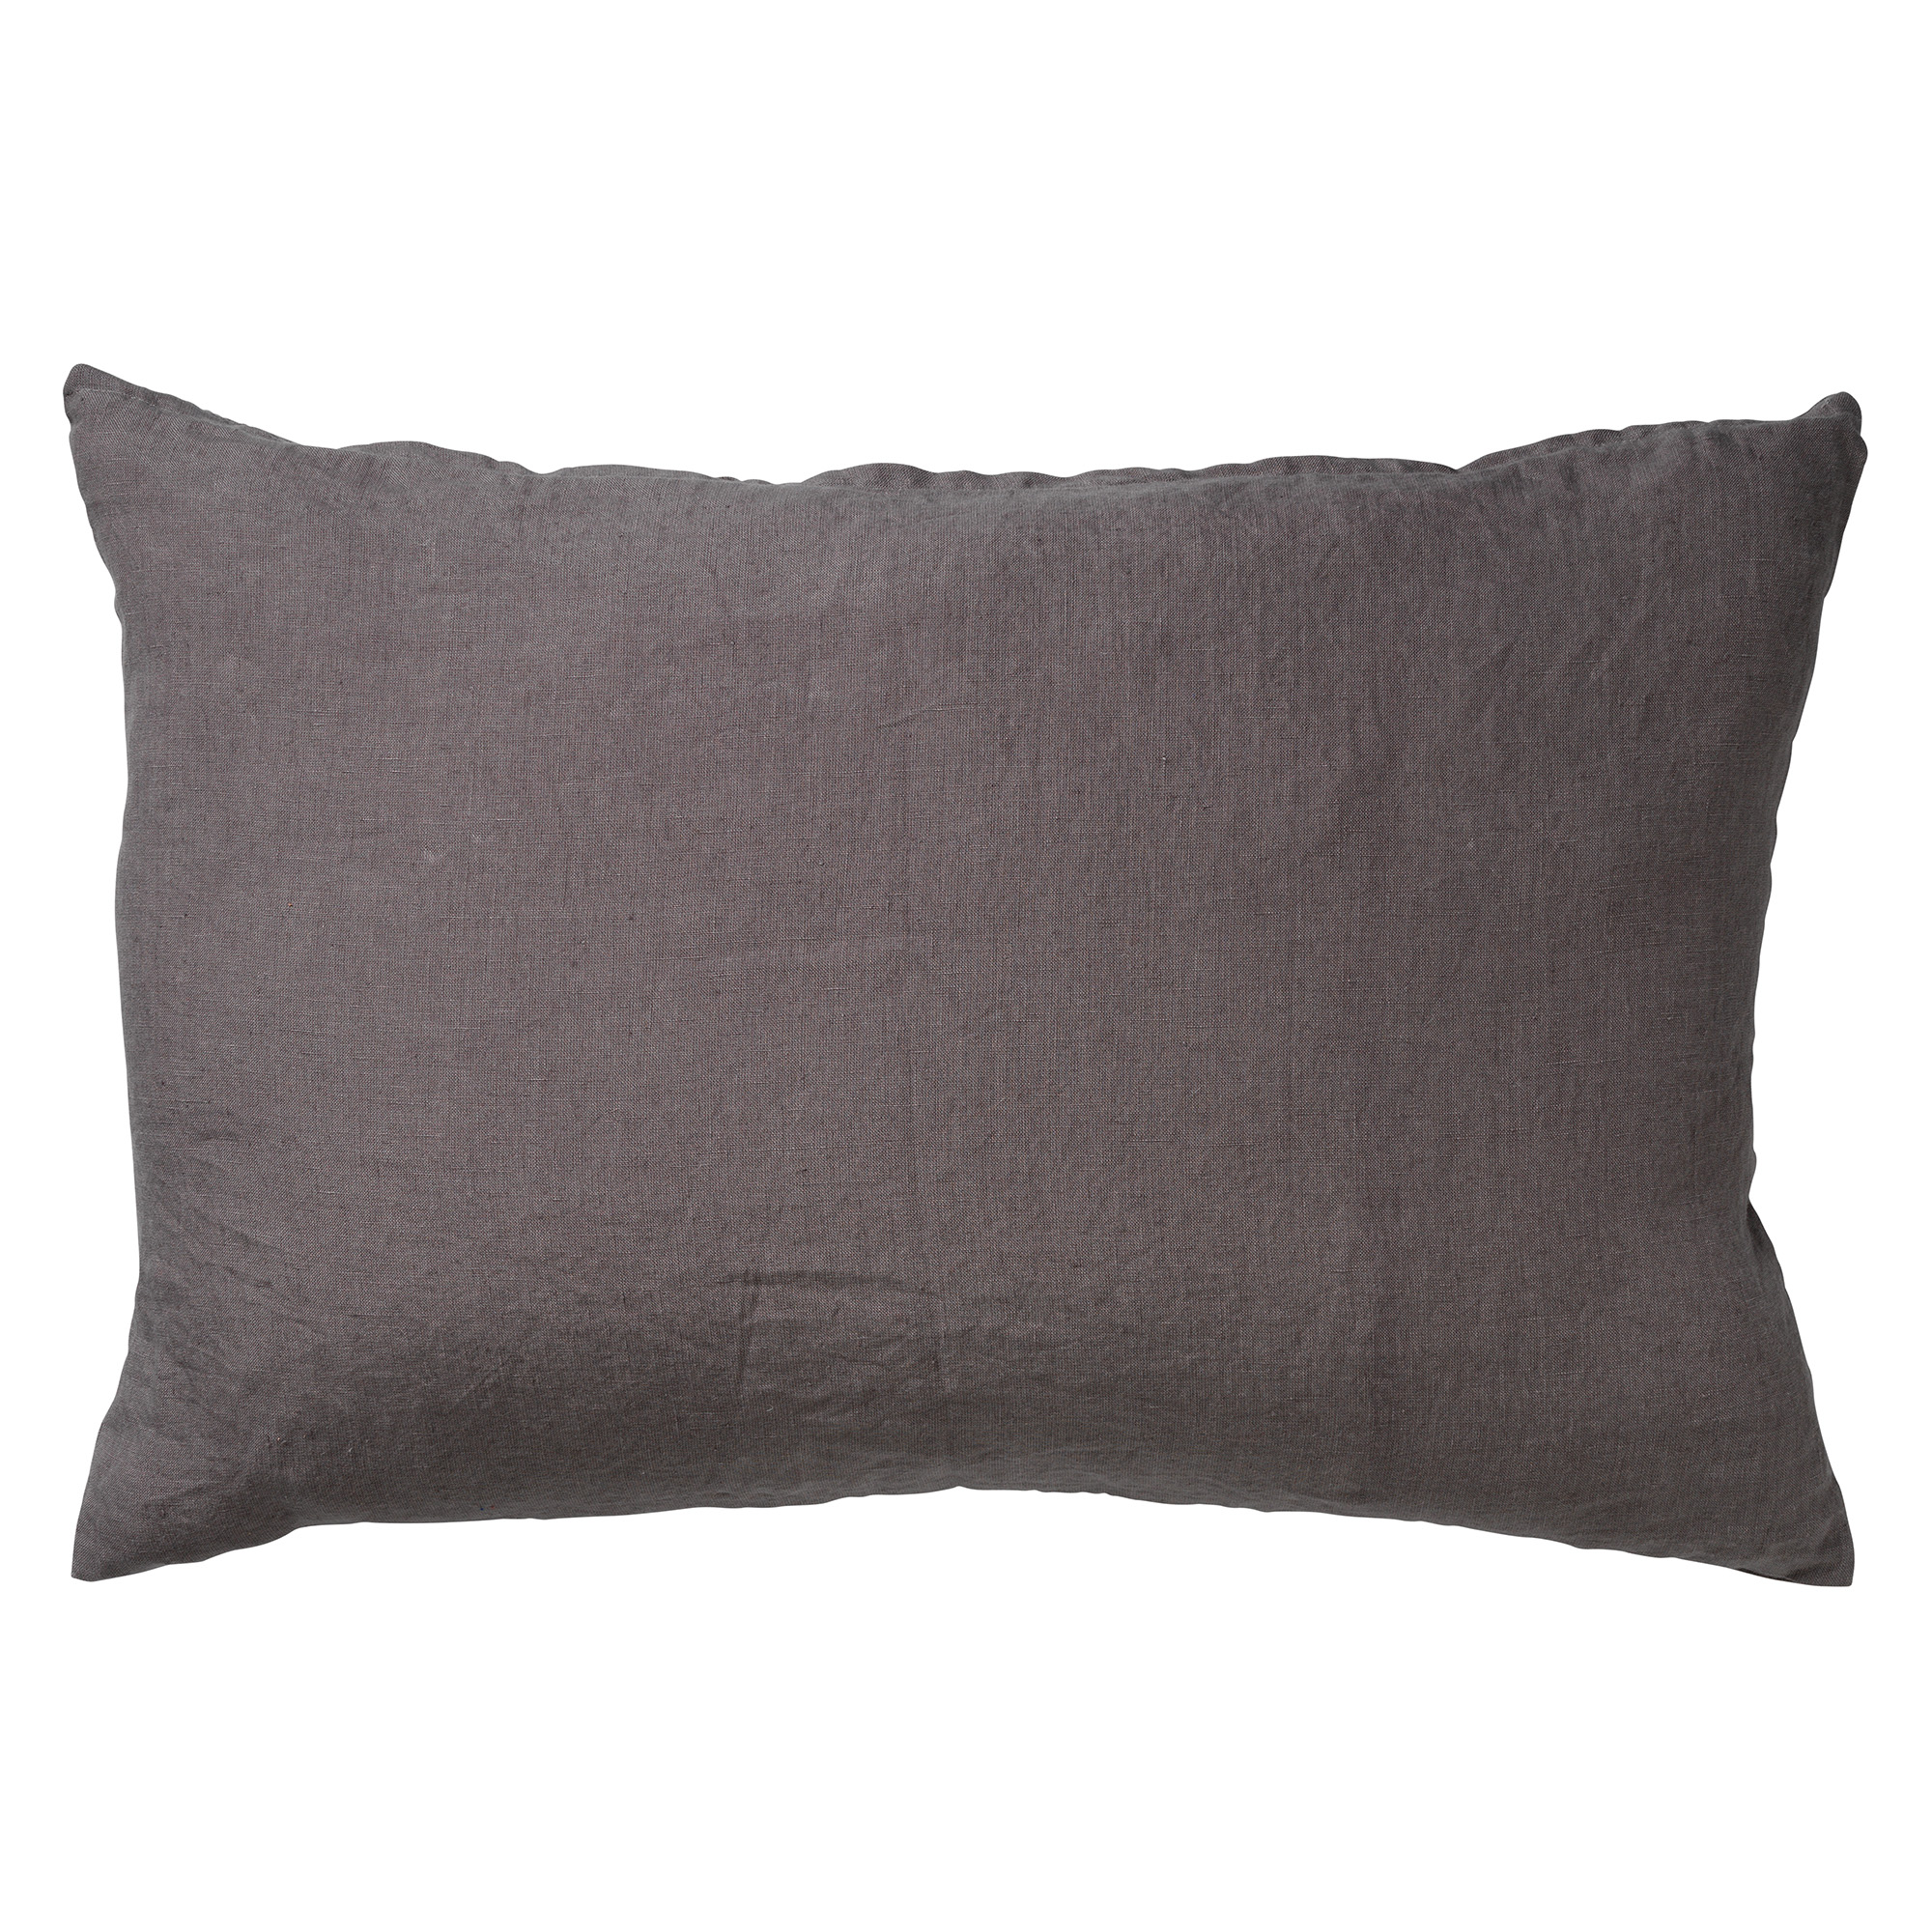 LINN - Kussenhoes 40x60 cm - 100% linnen - Charcoal Gray - antraciet